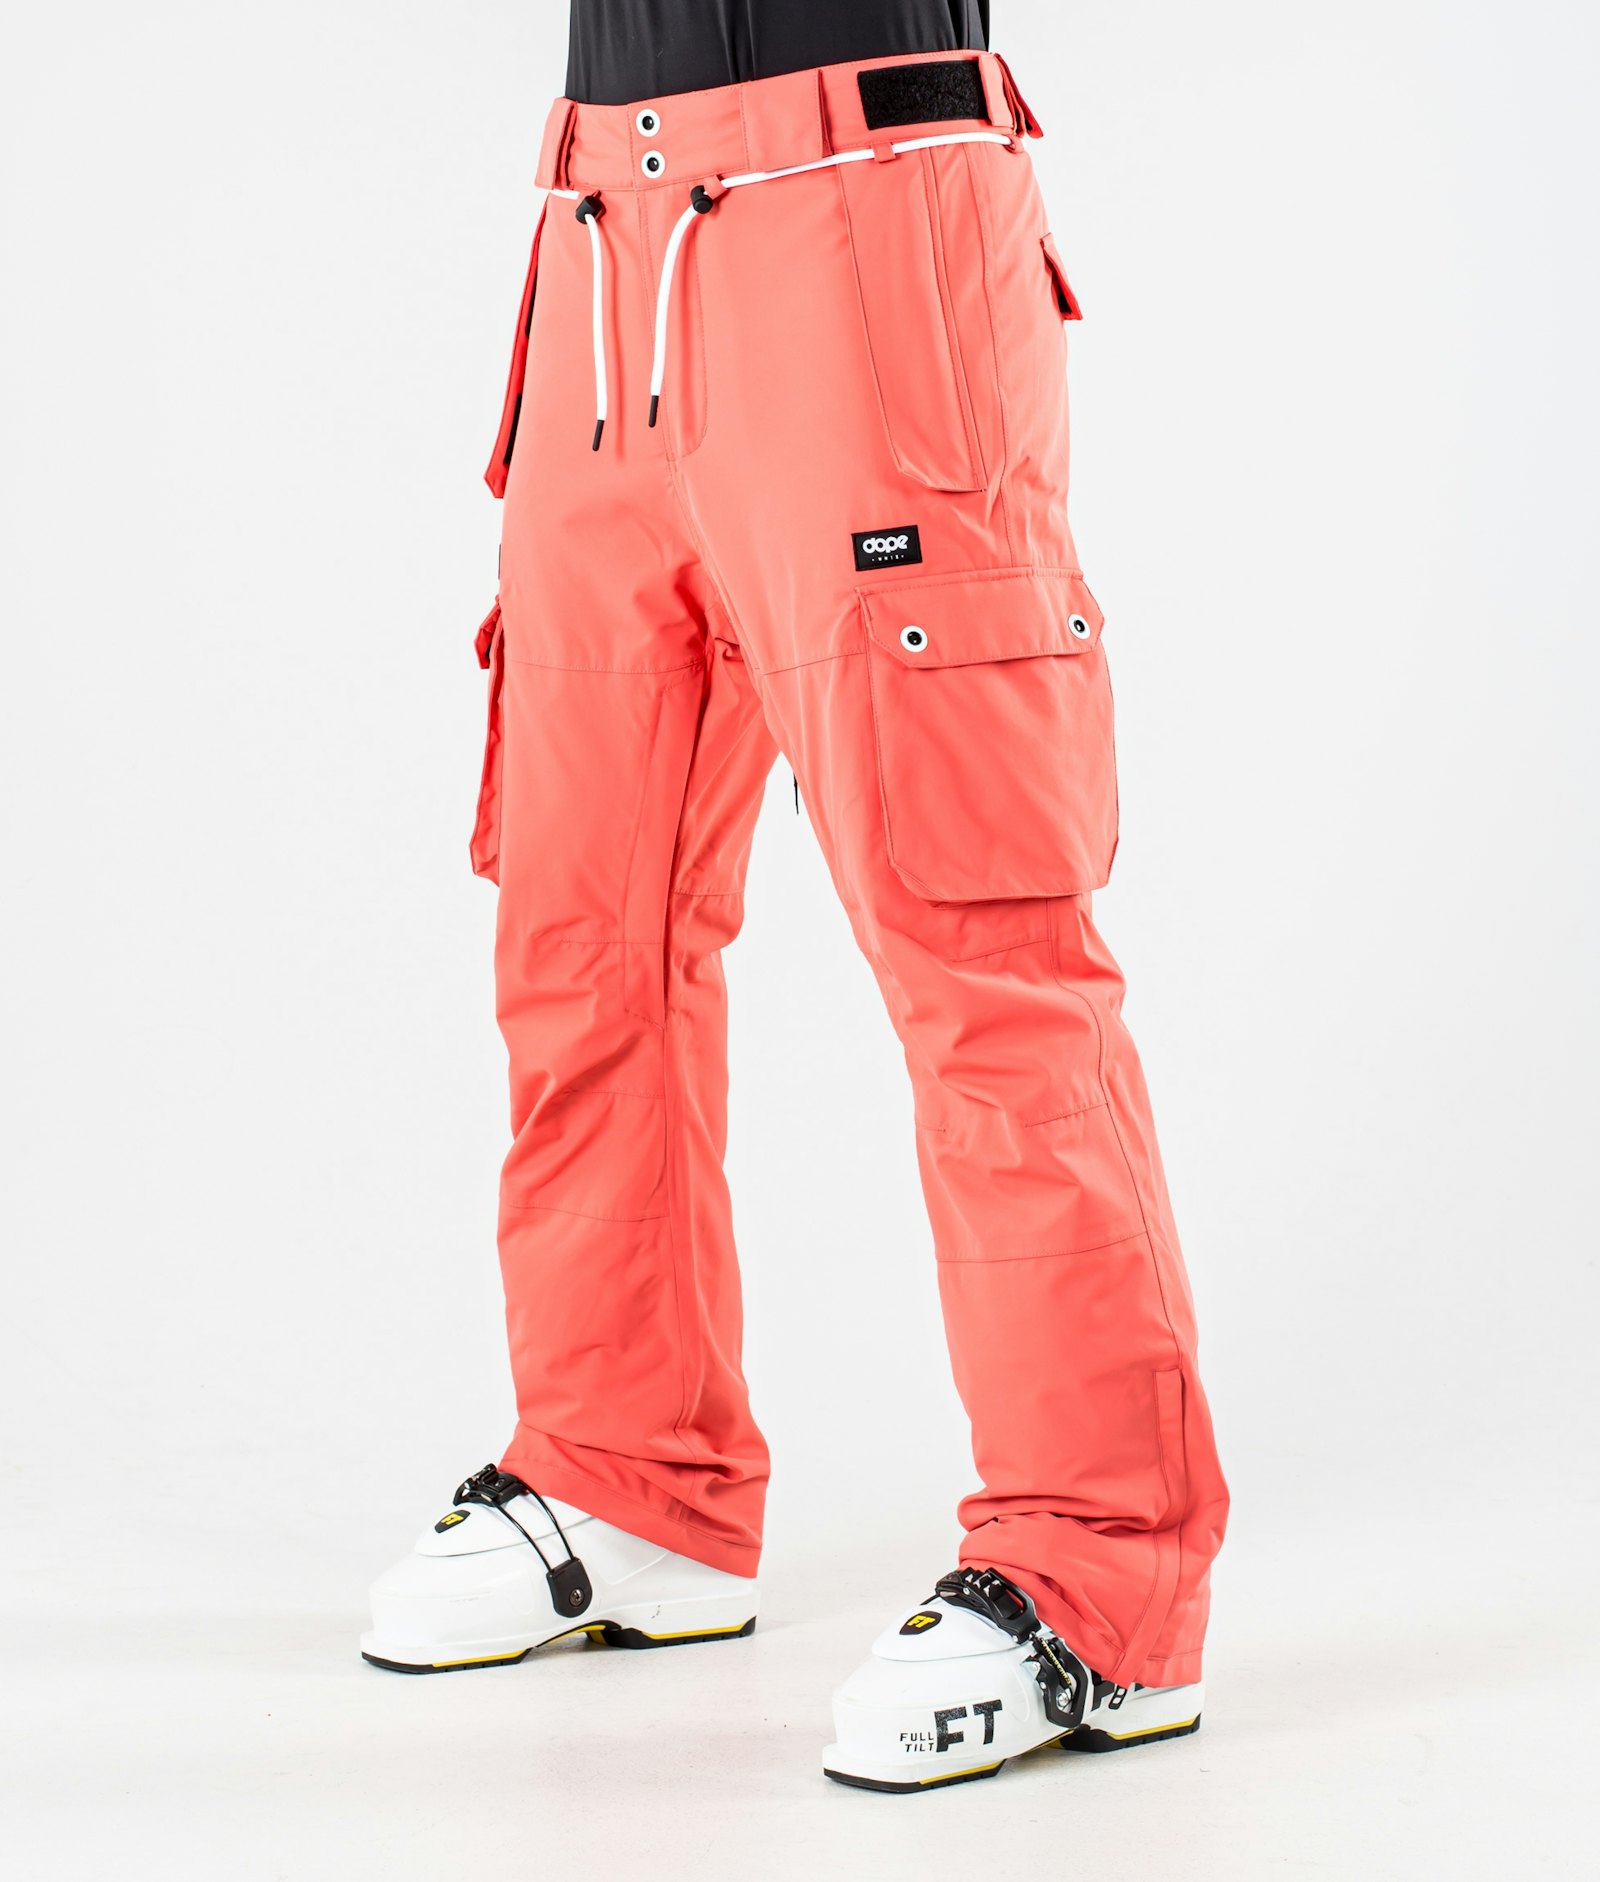 Iconic W 2020 Pantalones Esquí Mujer Coral